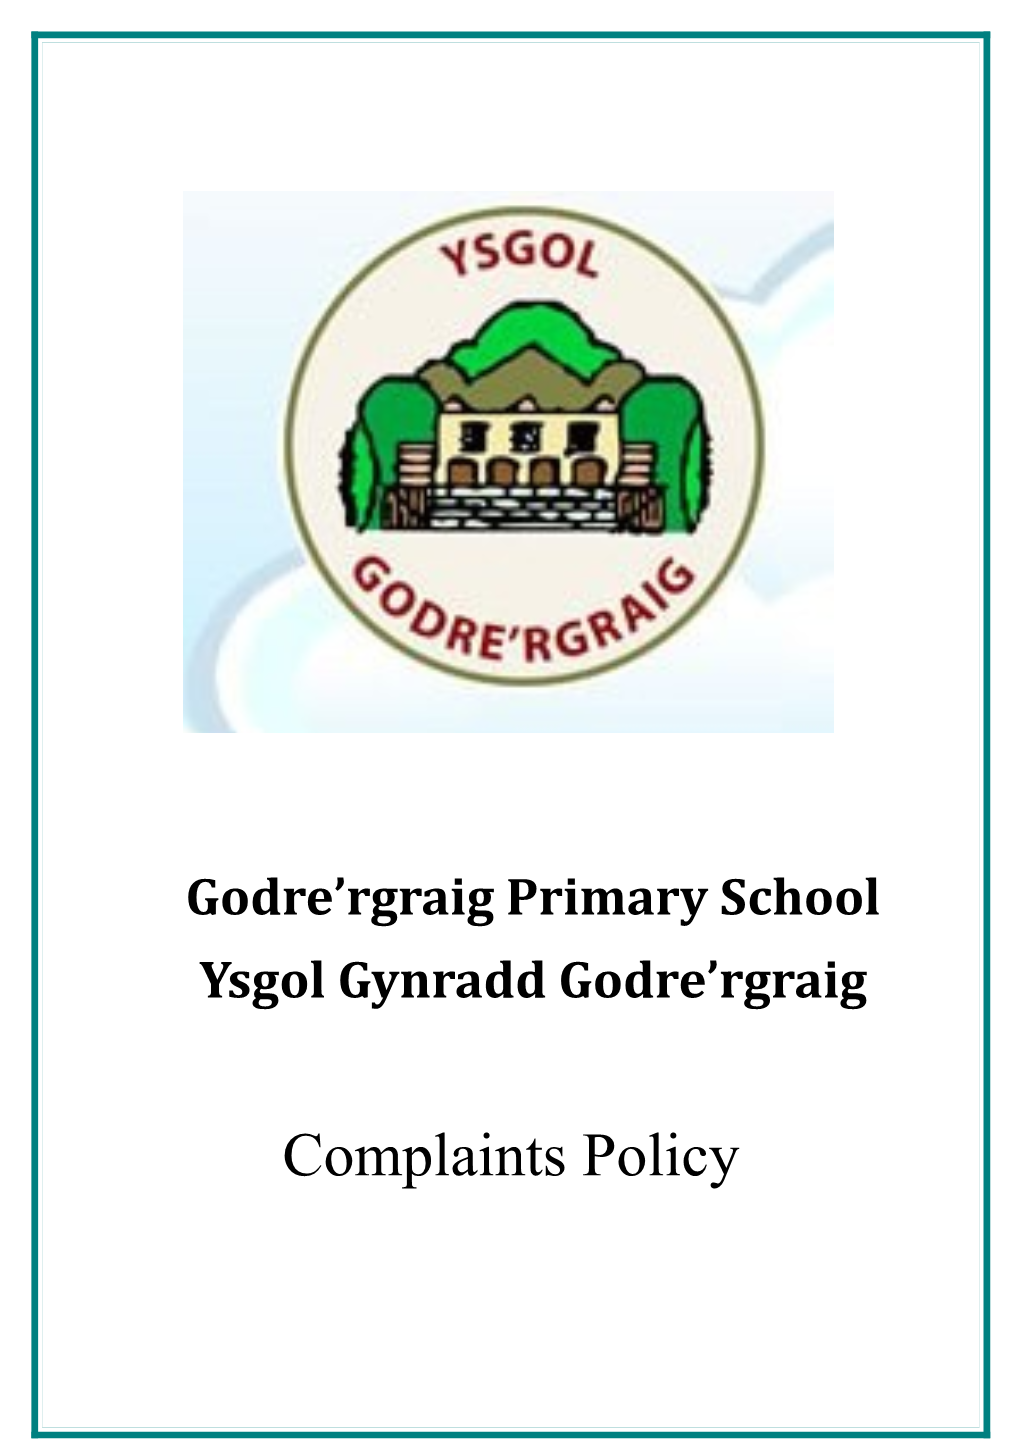 Godre Rgraig Primary School